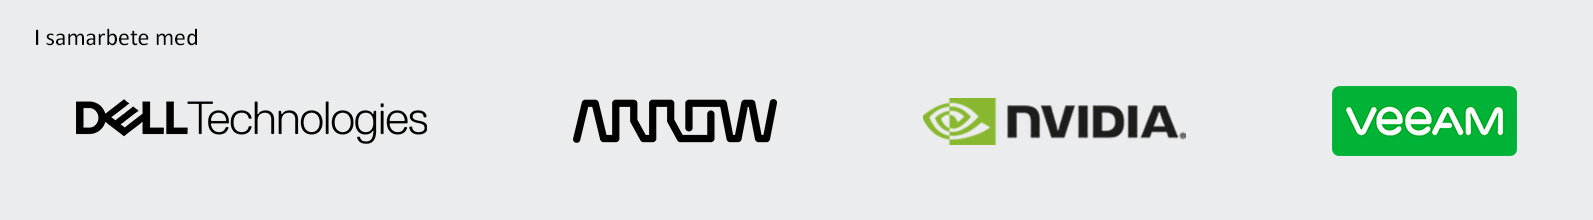 Rsamarbete_logo_VMworld2021_HEMSIDAN